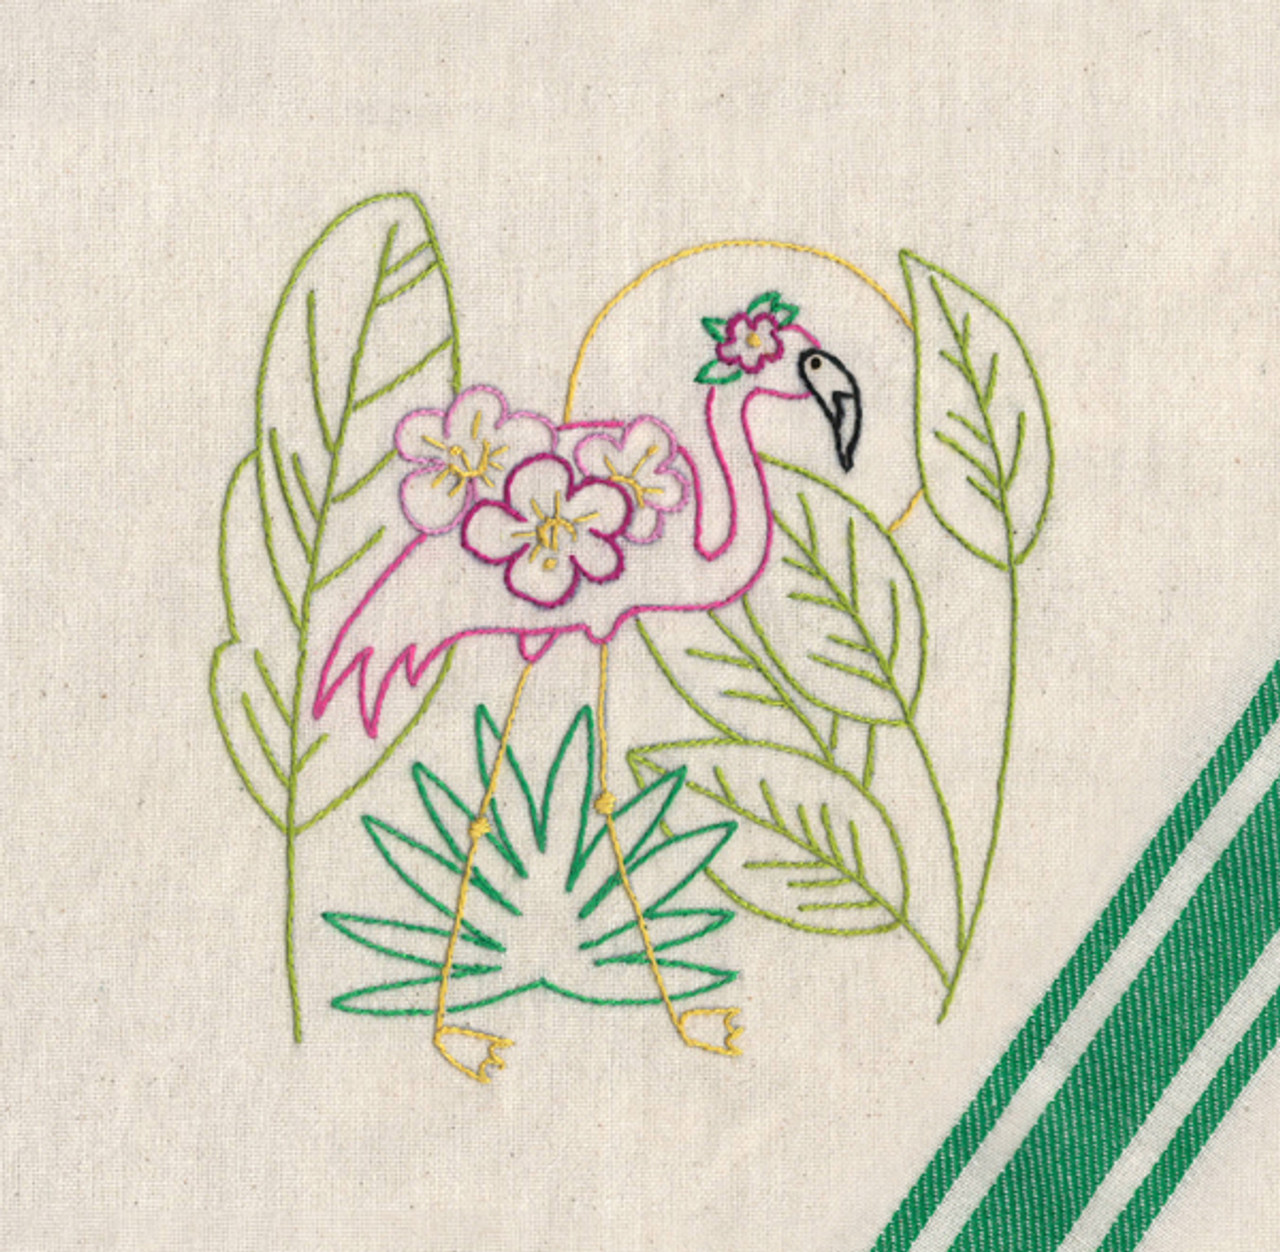 Stitcher's Revolution Iron-On Transfer Pattern for Embroidery, Around The World Landmarks